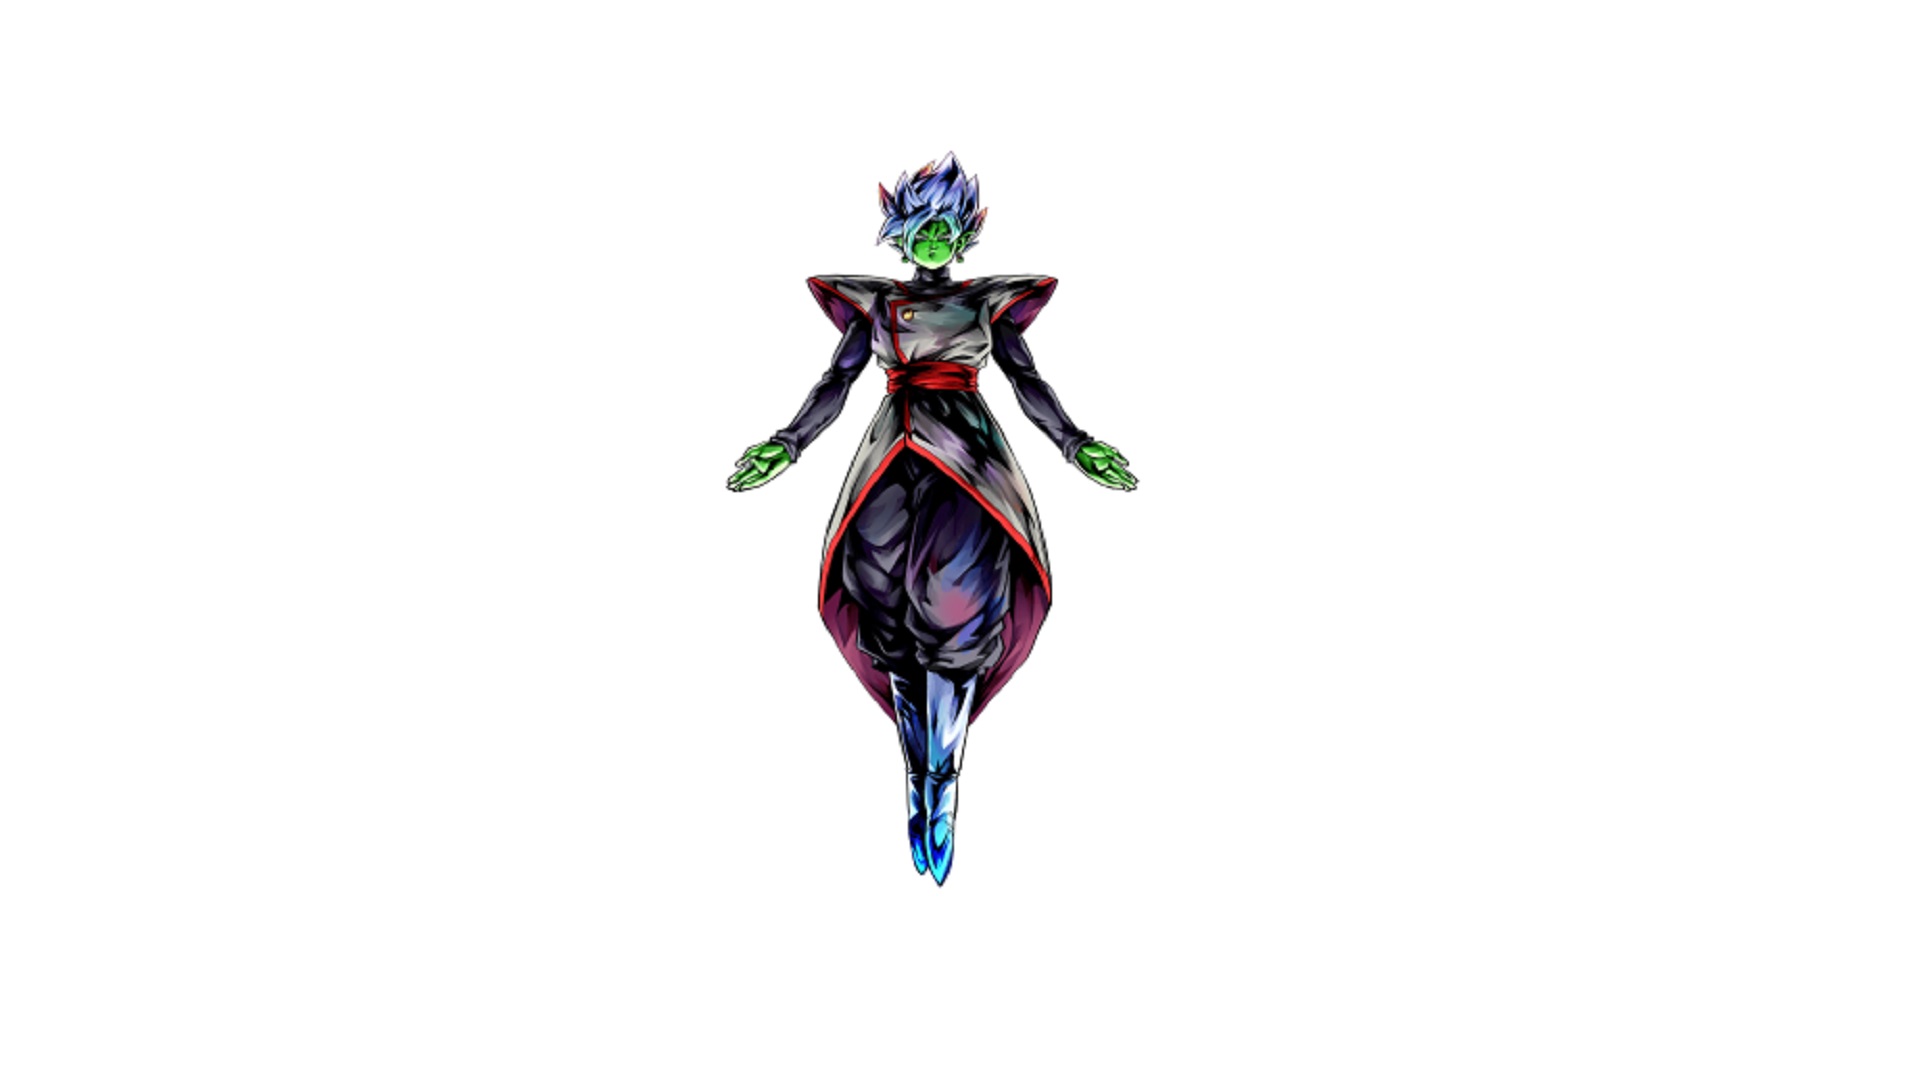 SP Super Full Power Saiyan 4 Goku (Green)